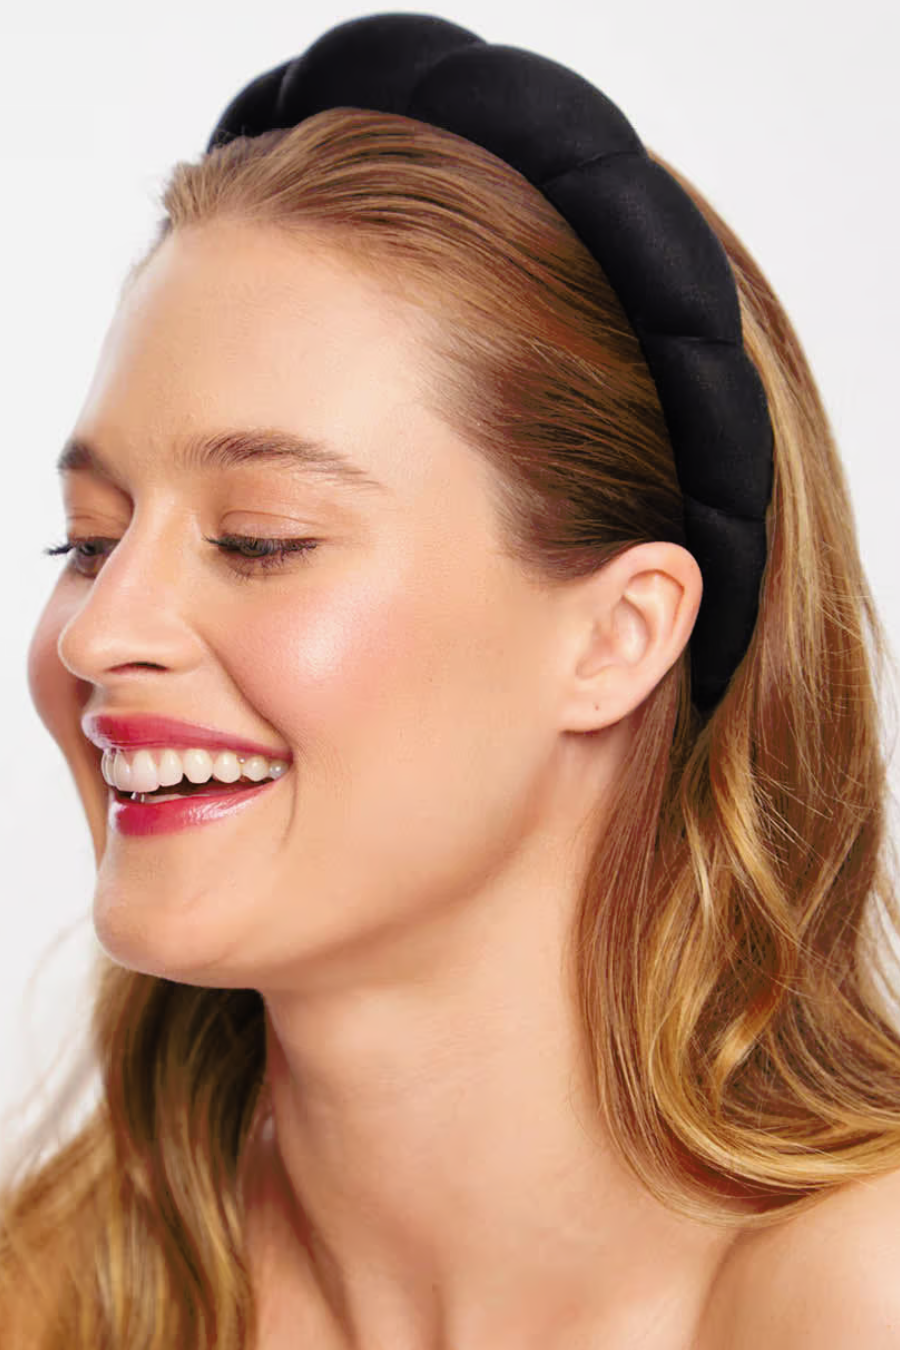 girl smiling wearing black headband 